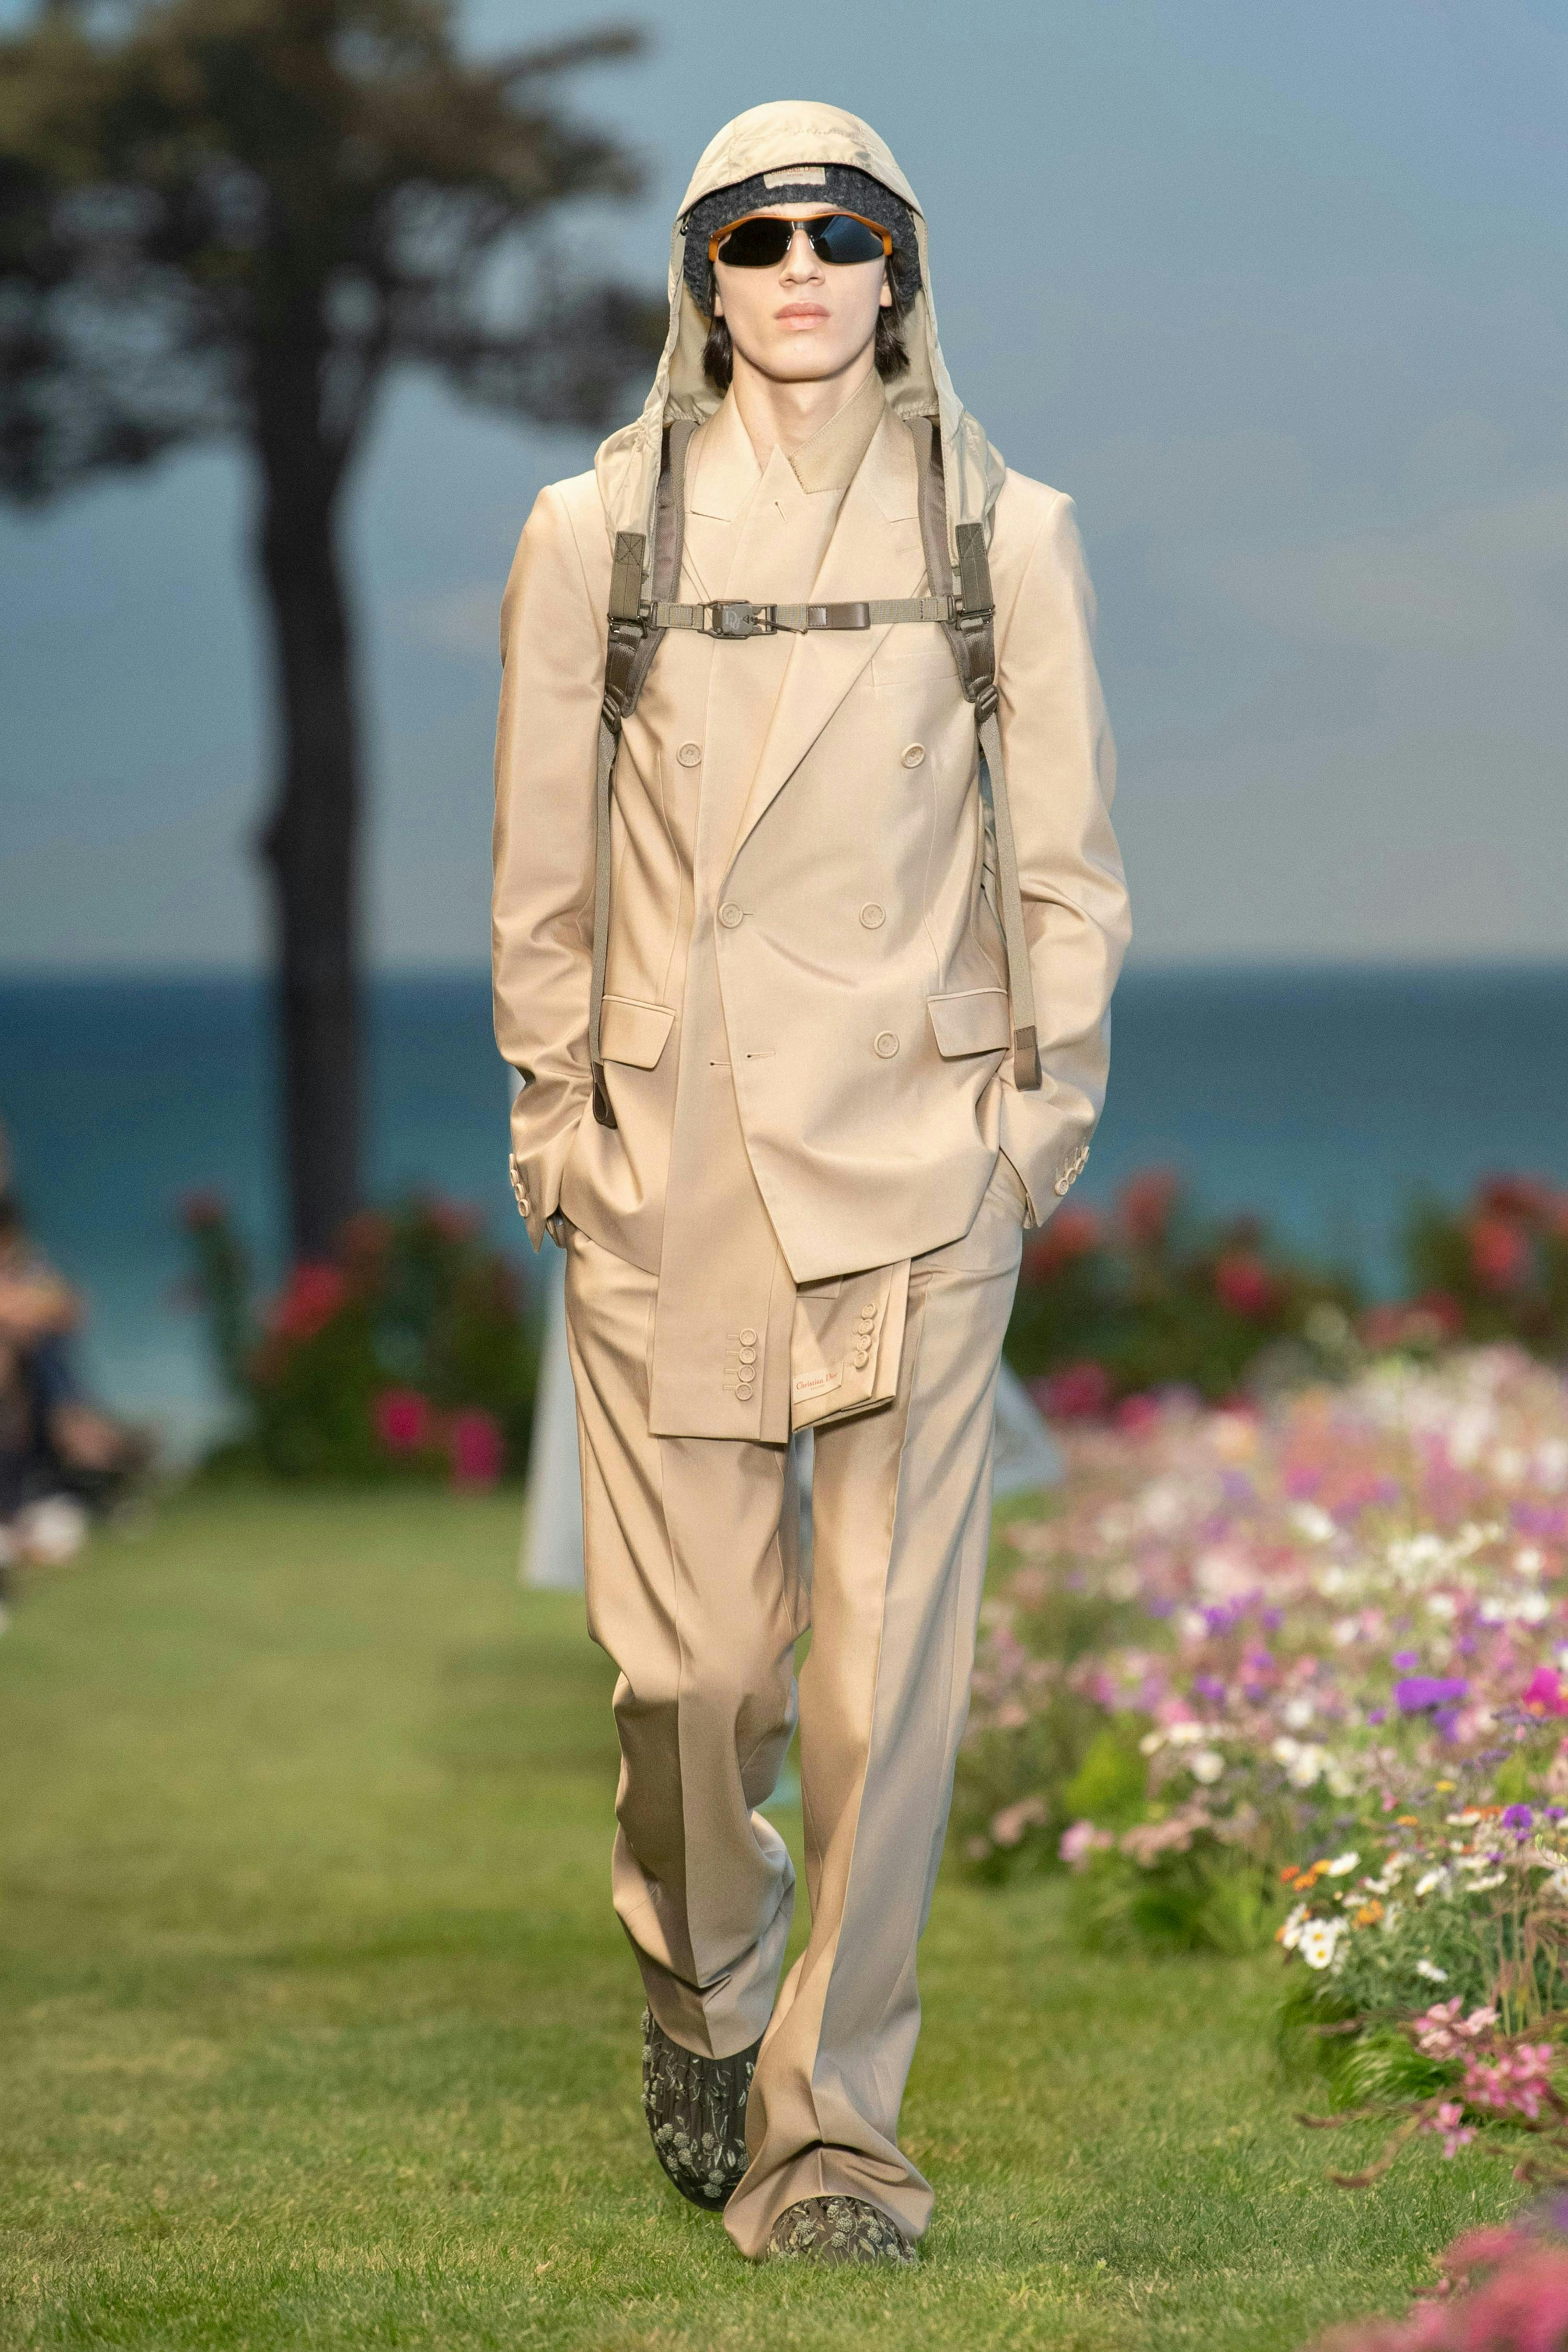 clothing apparel overcoat coat sunglasses accessories suit grass plant person